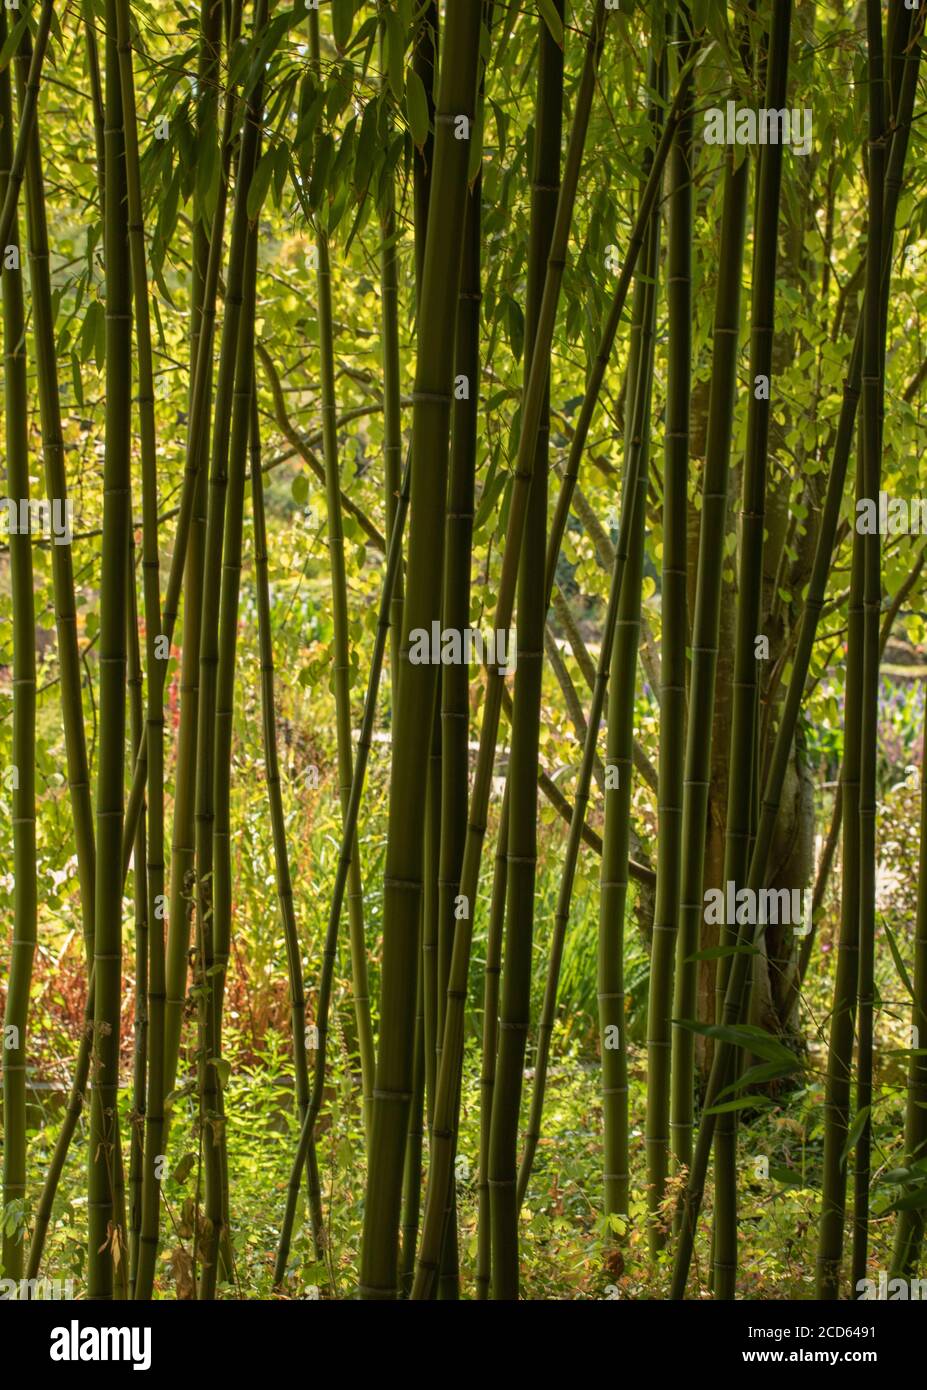 Phyllostachys Purpurata (english bamboo)forming a natural backlit screen in a sunny garden setting Stock Photo